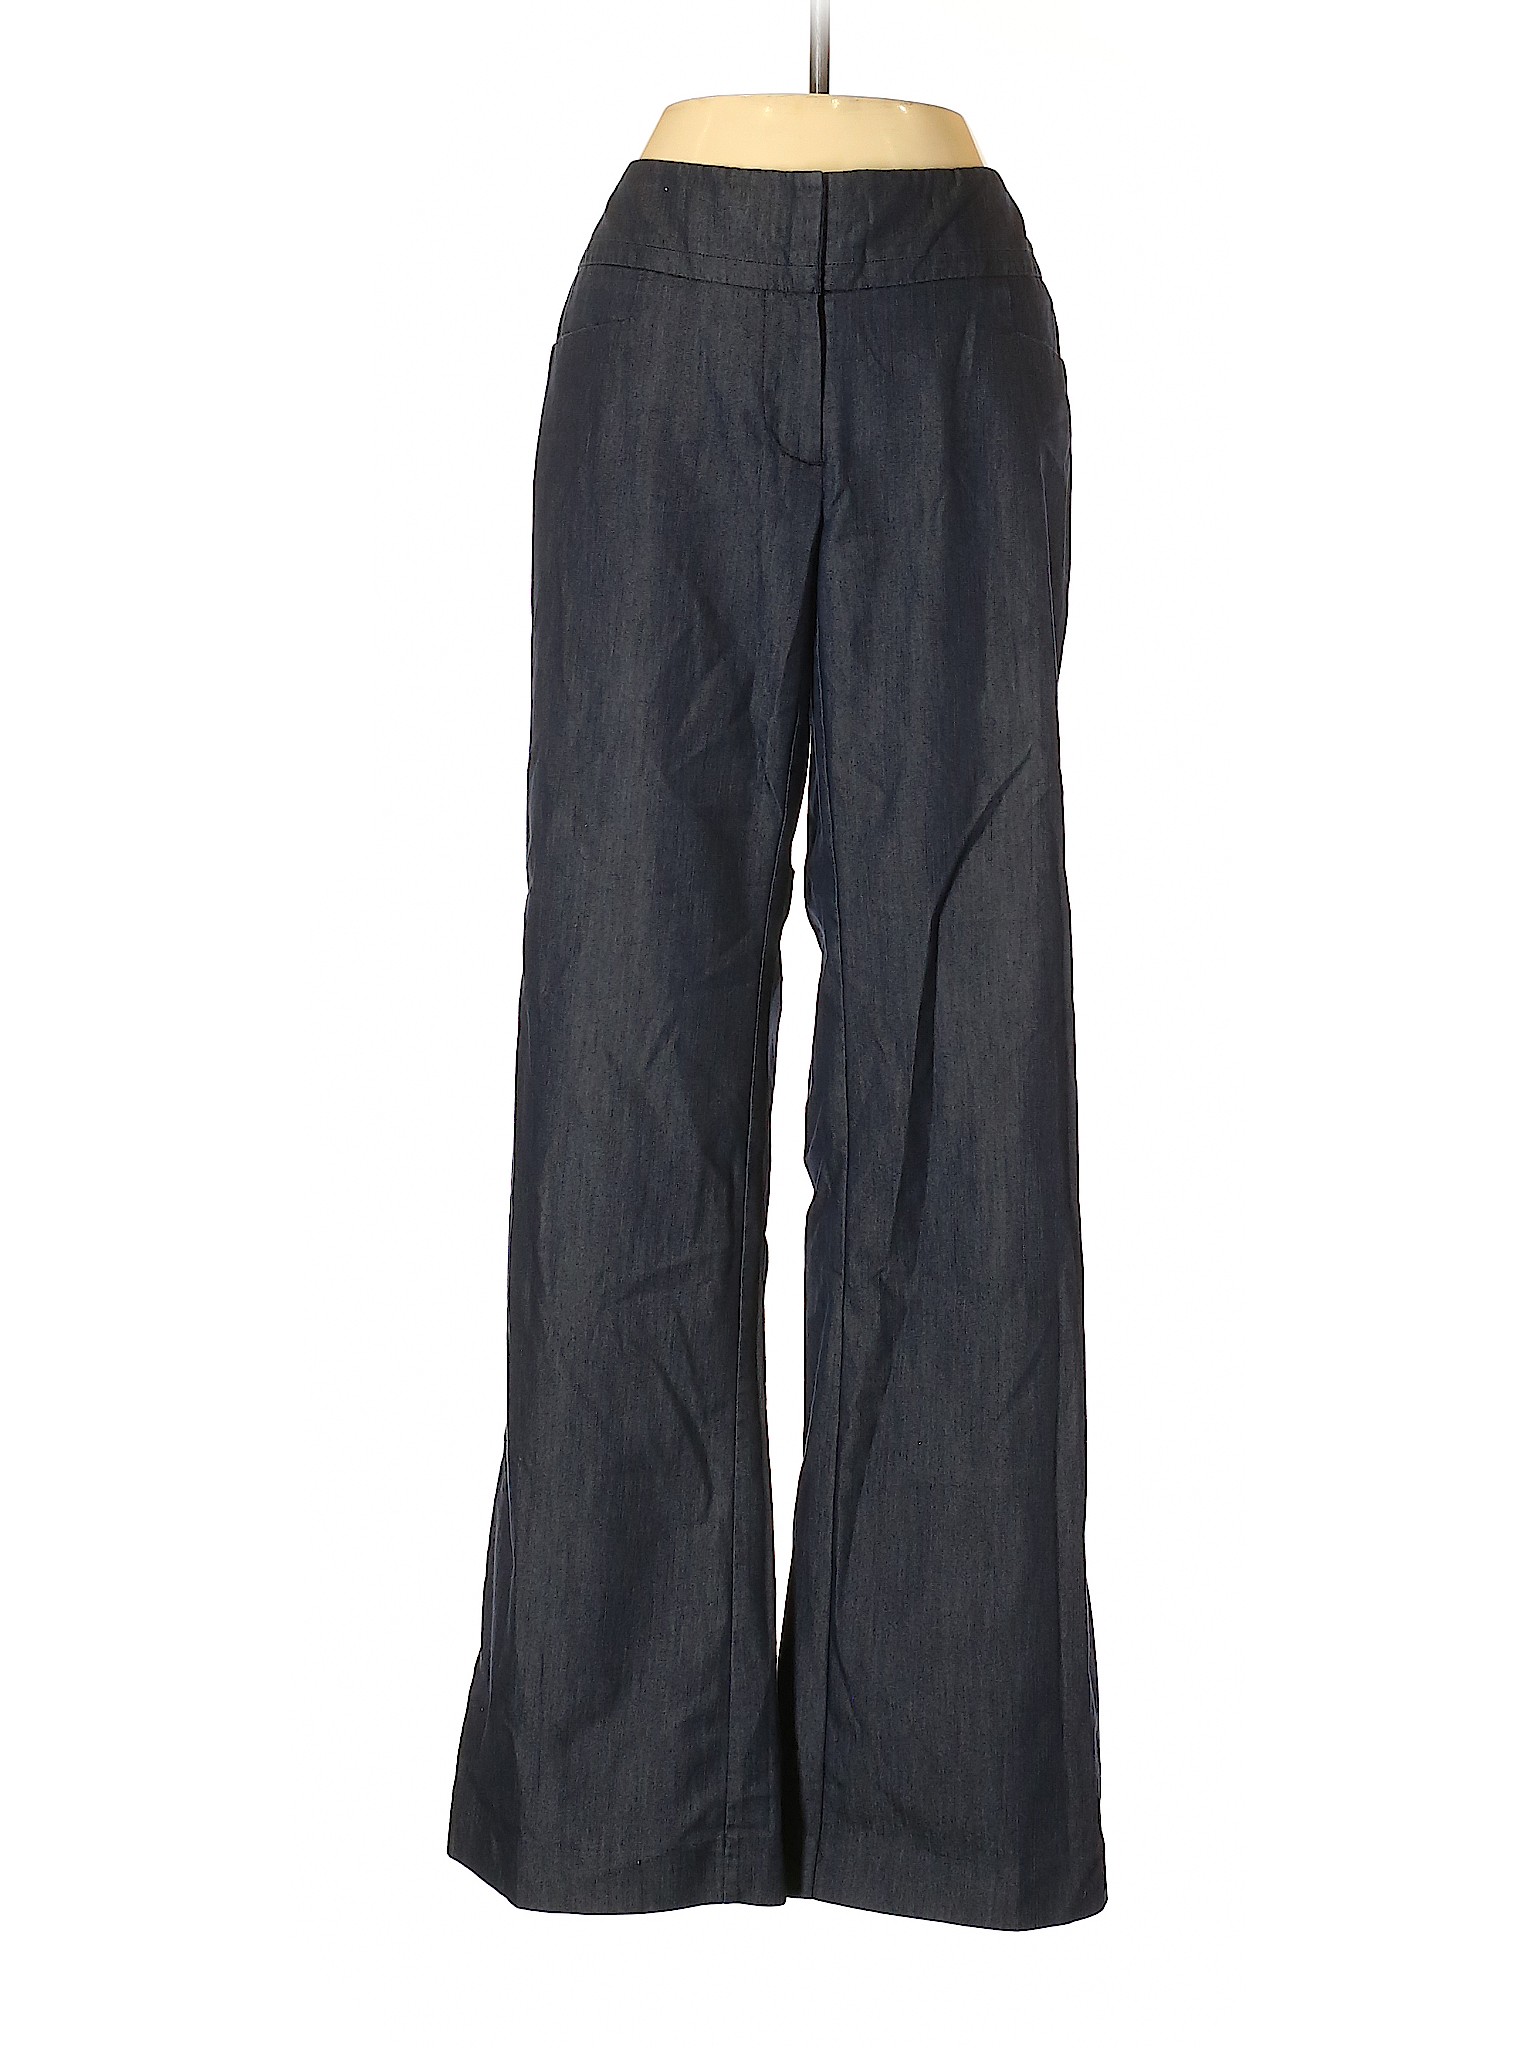 Apt. 9 Women Gray Dress Pants 2 | eBay